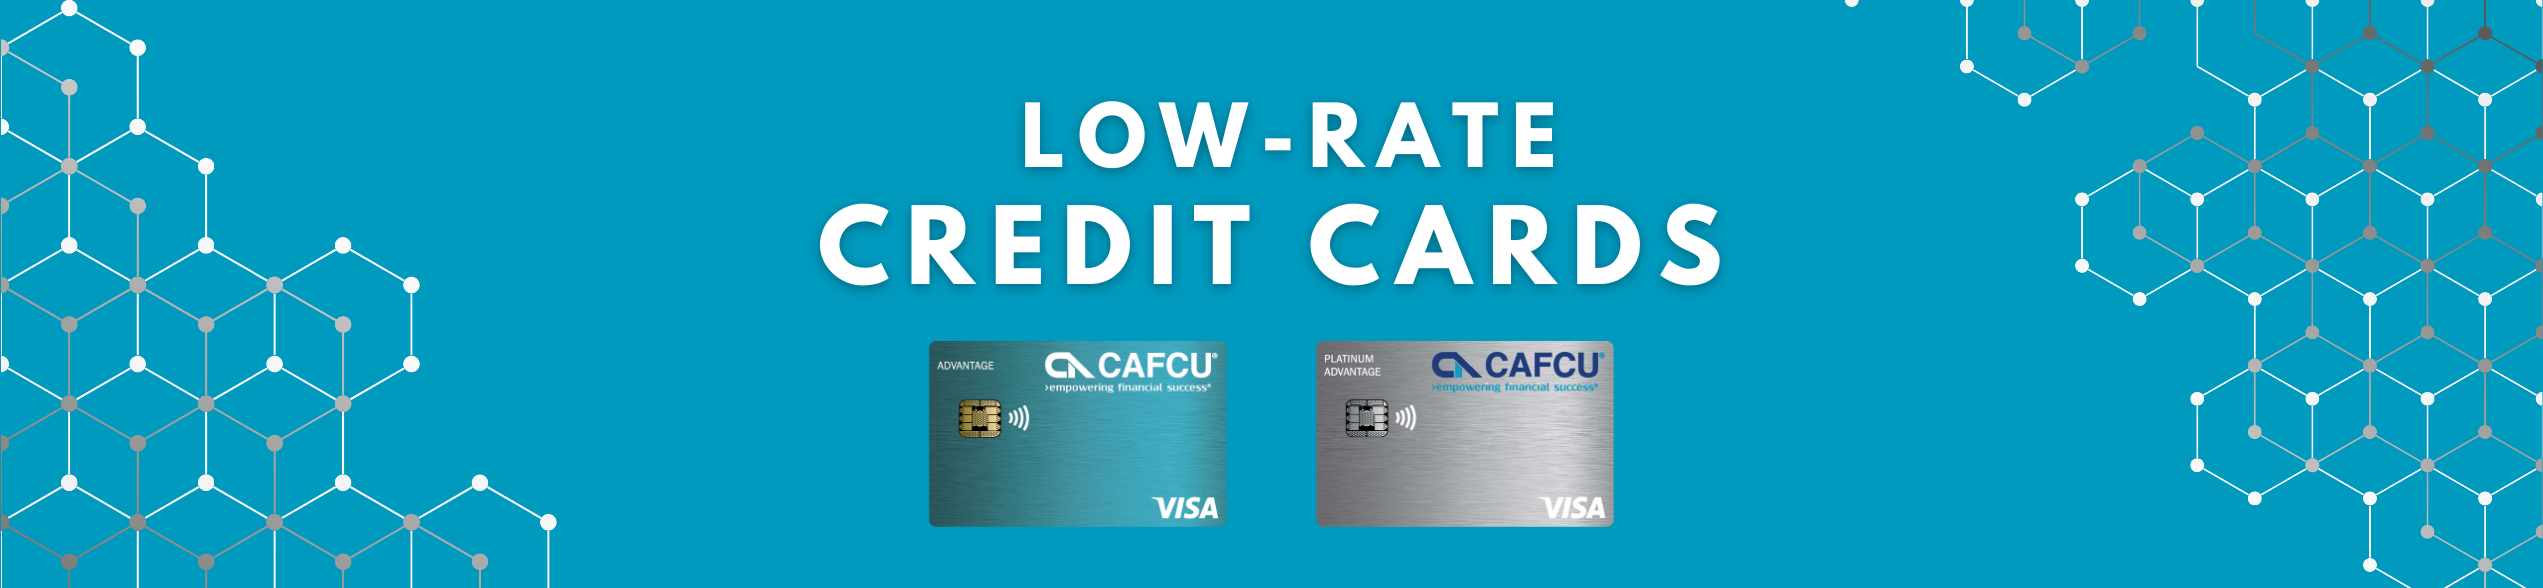 CAFCU offers low-rate rewards credit cards